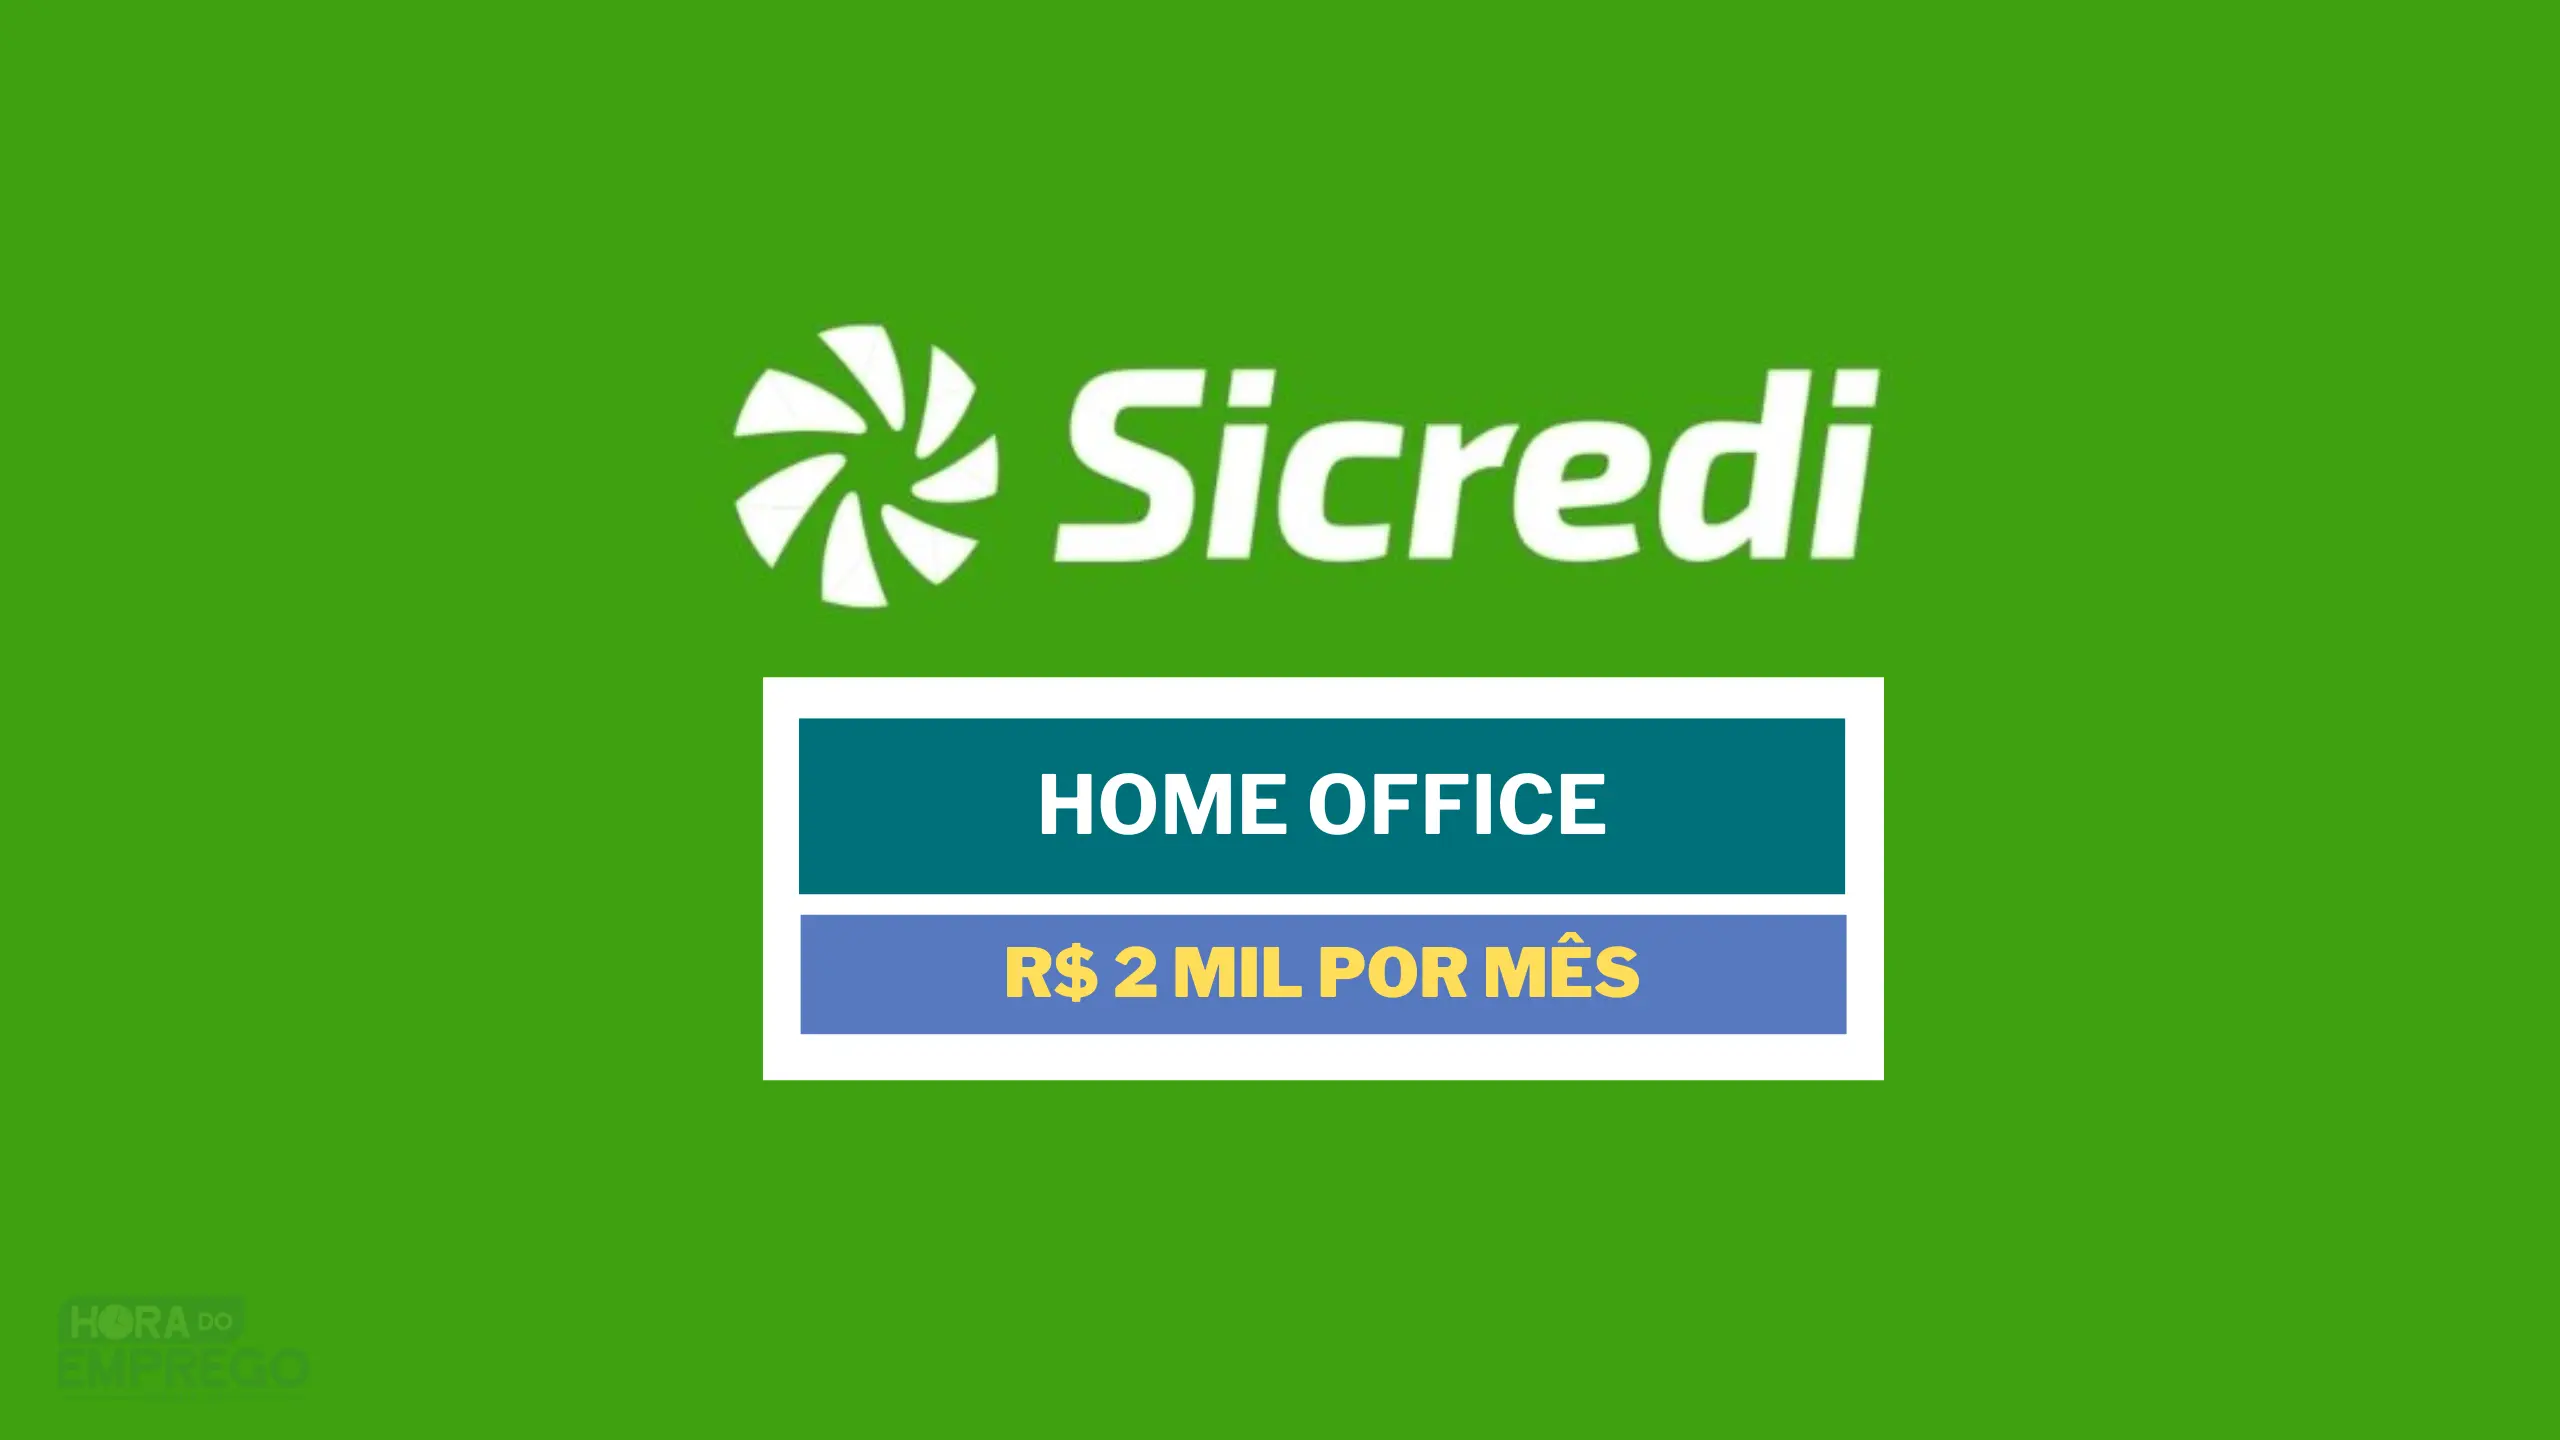 Banco Sicredi abriu vagas HOME OFFICE com saláiro de R$ 2 MIL para Auxiliar Administrativo 